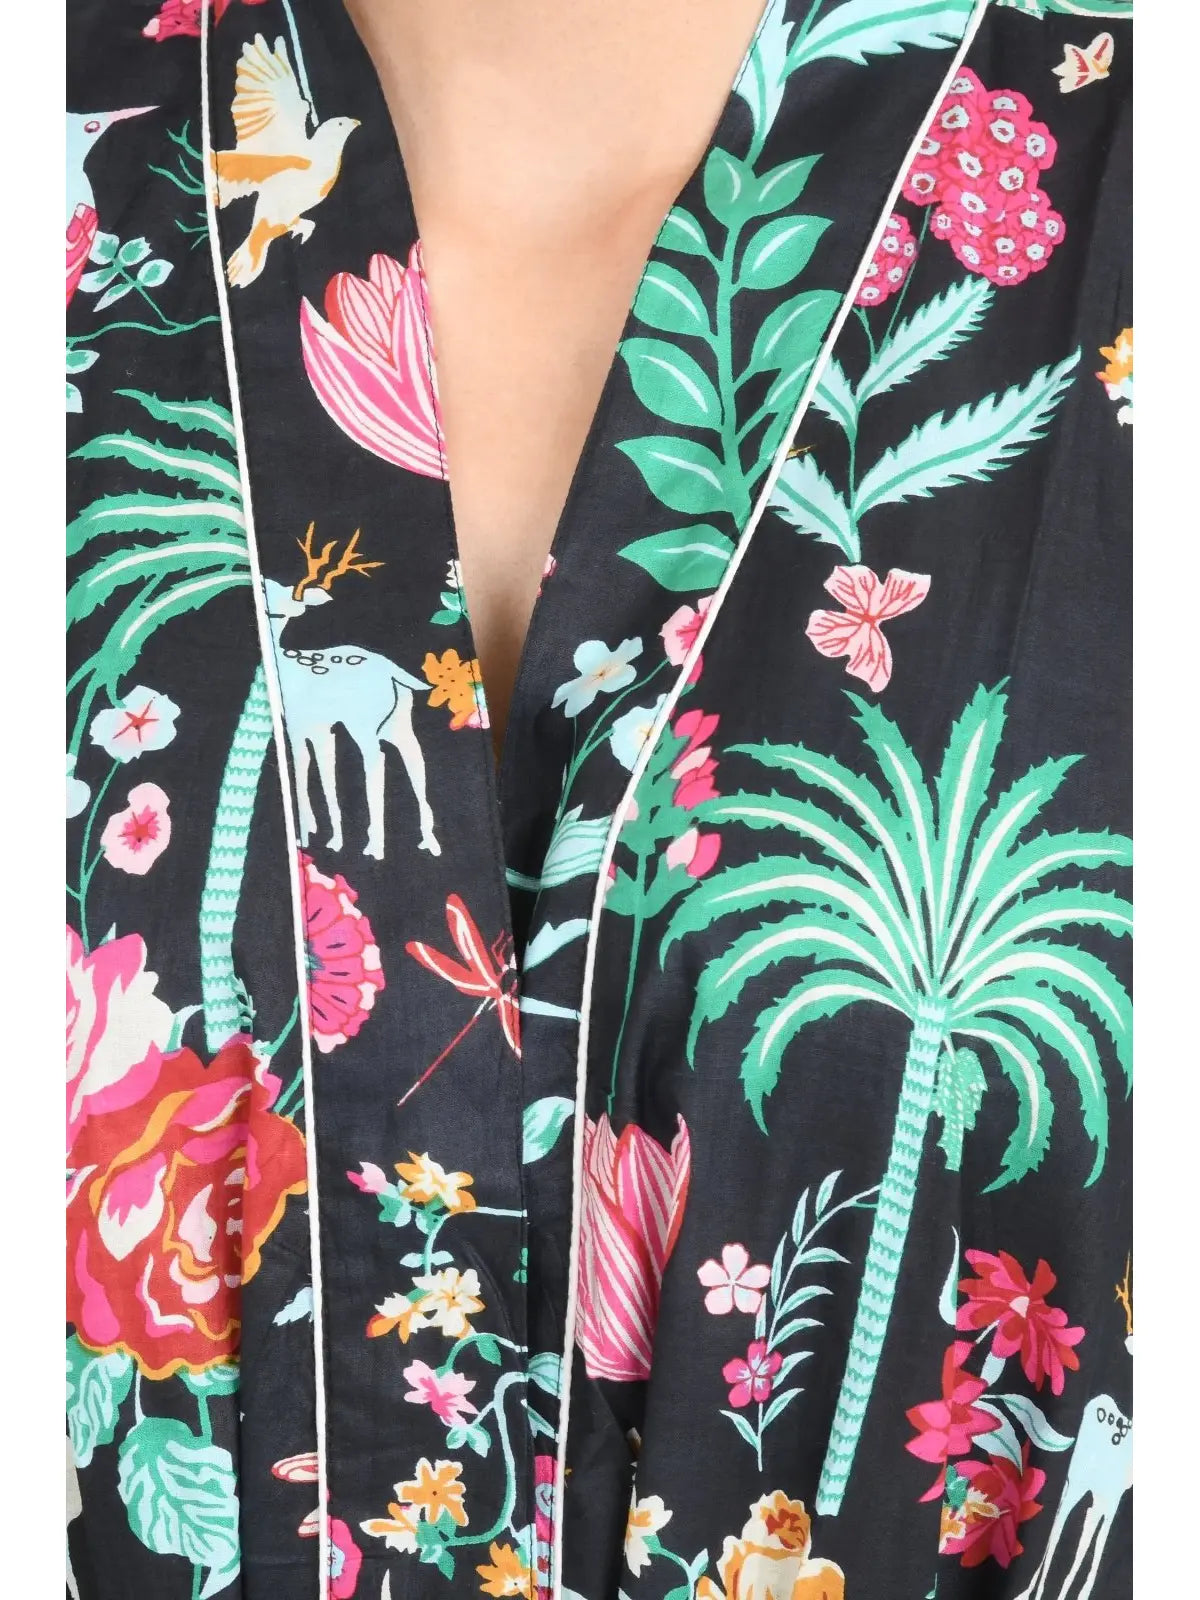 Boho Cotton Kimono House Robe Indian Handprinted Floral Print Pattern | Lightweight Summer Luxury Beach Holidays Yacht Cover Up Stunning Dress